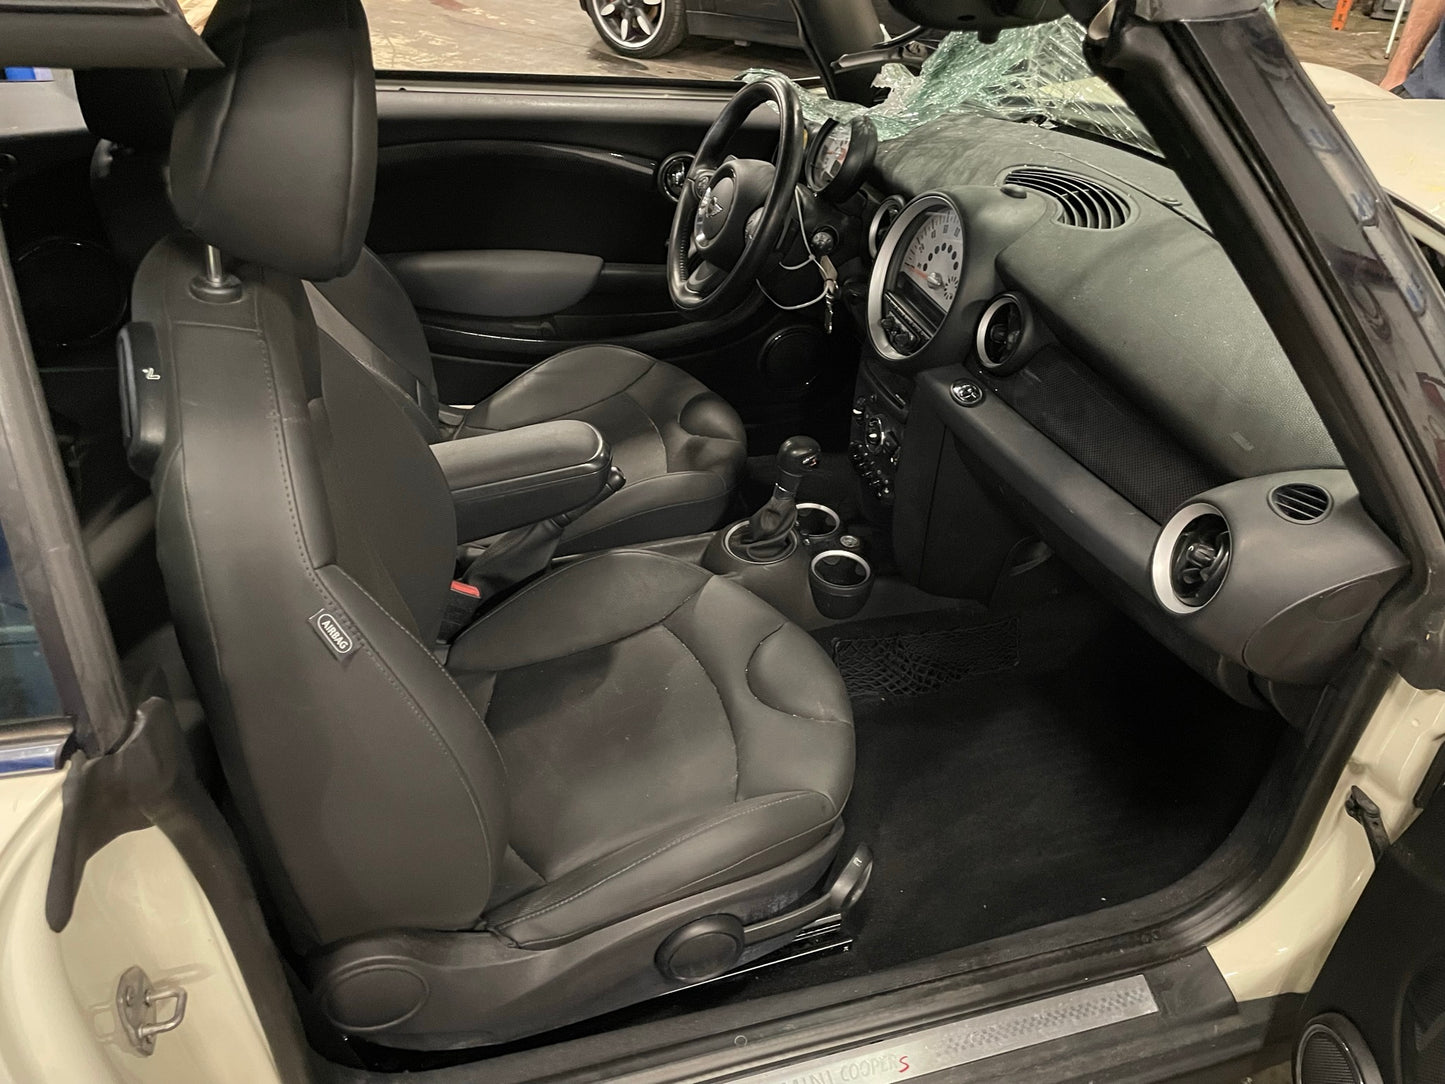 2011 MINI Cooper Convertible S, New Parts Car (February 2022) Stk #280